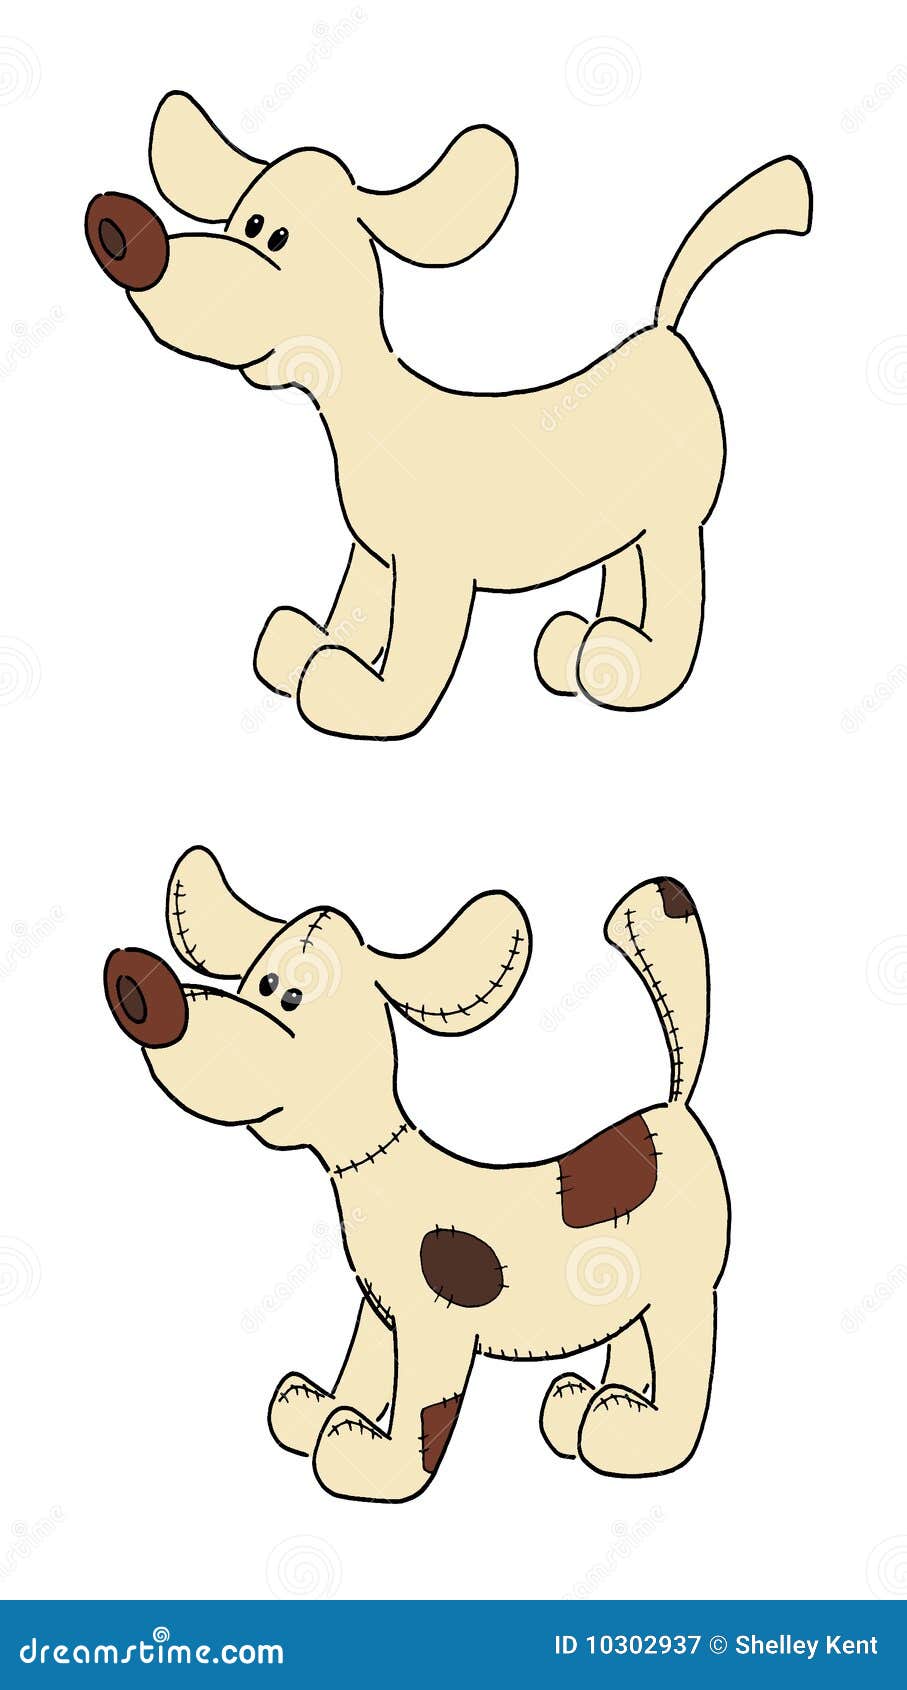 Cartoon dogs stock illustration. Illustration of canine - 10302937